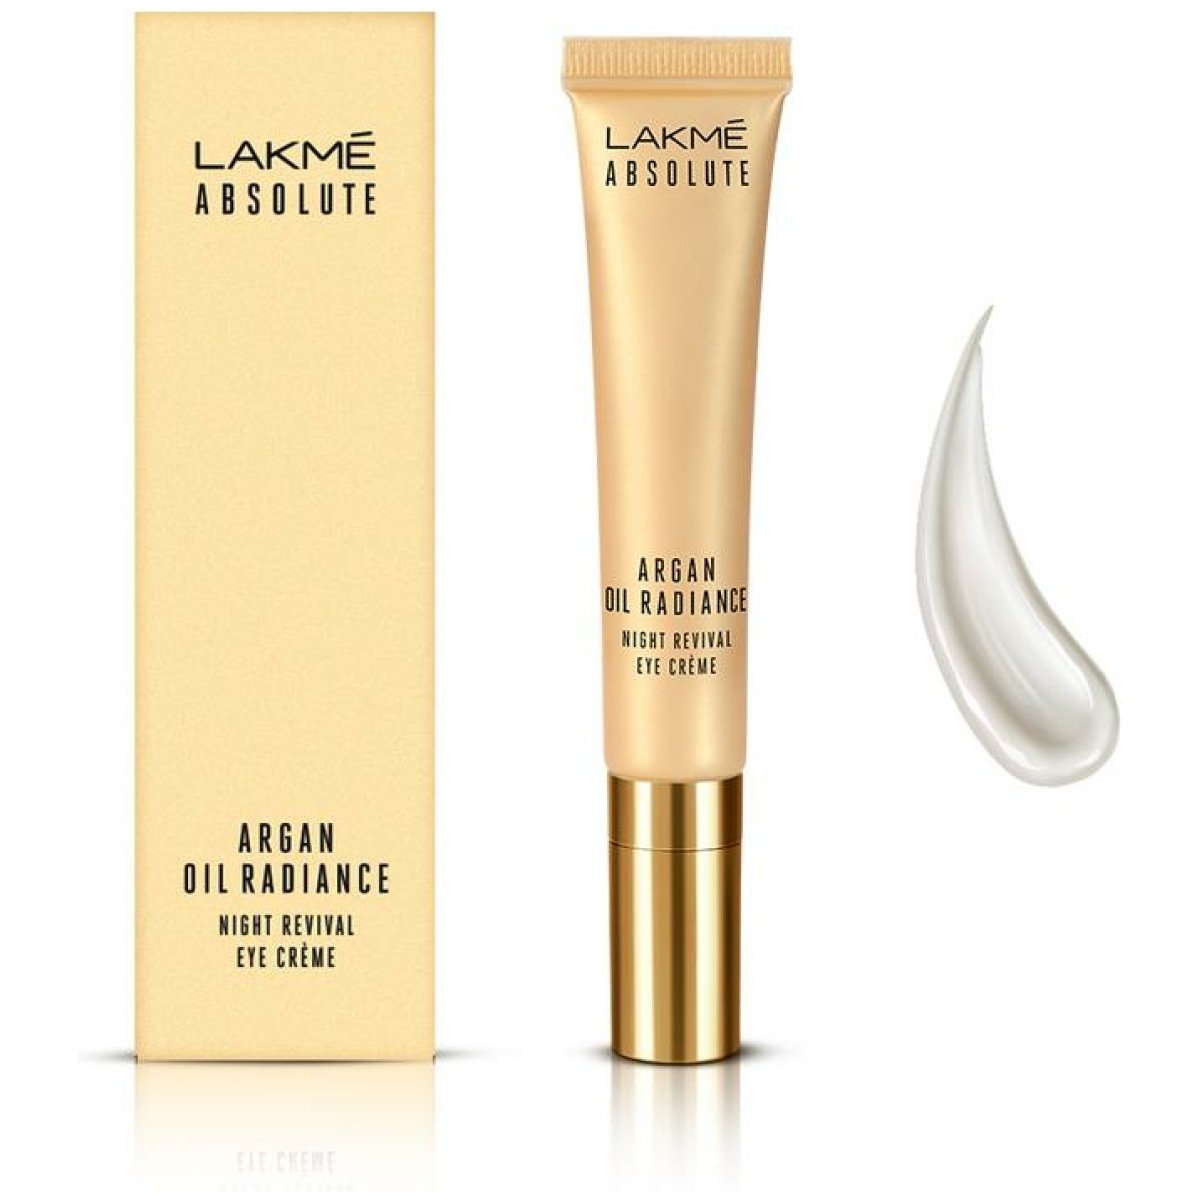 Lakme Absolute Argan Oil Radiance Night Revival Eye Cream for Normal Skin (15 g)